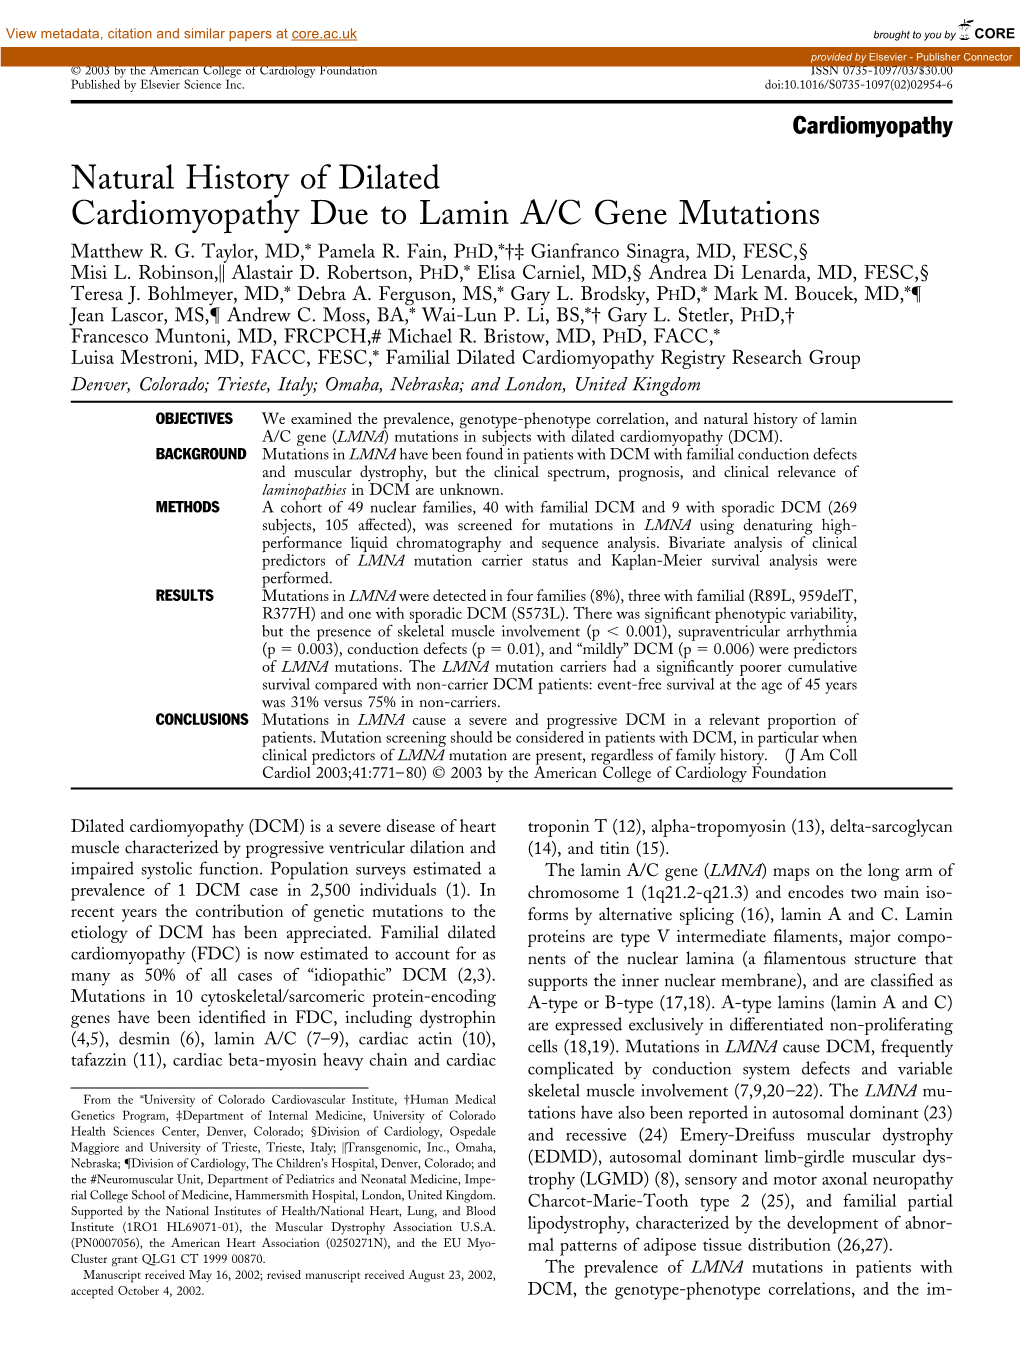 Natural History of Dilated Cardiomyopathy Due to Lamin A/C Gene Mutations Matthew R